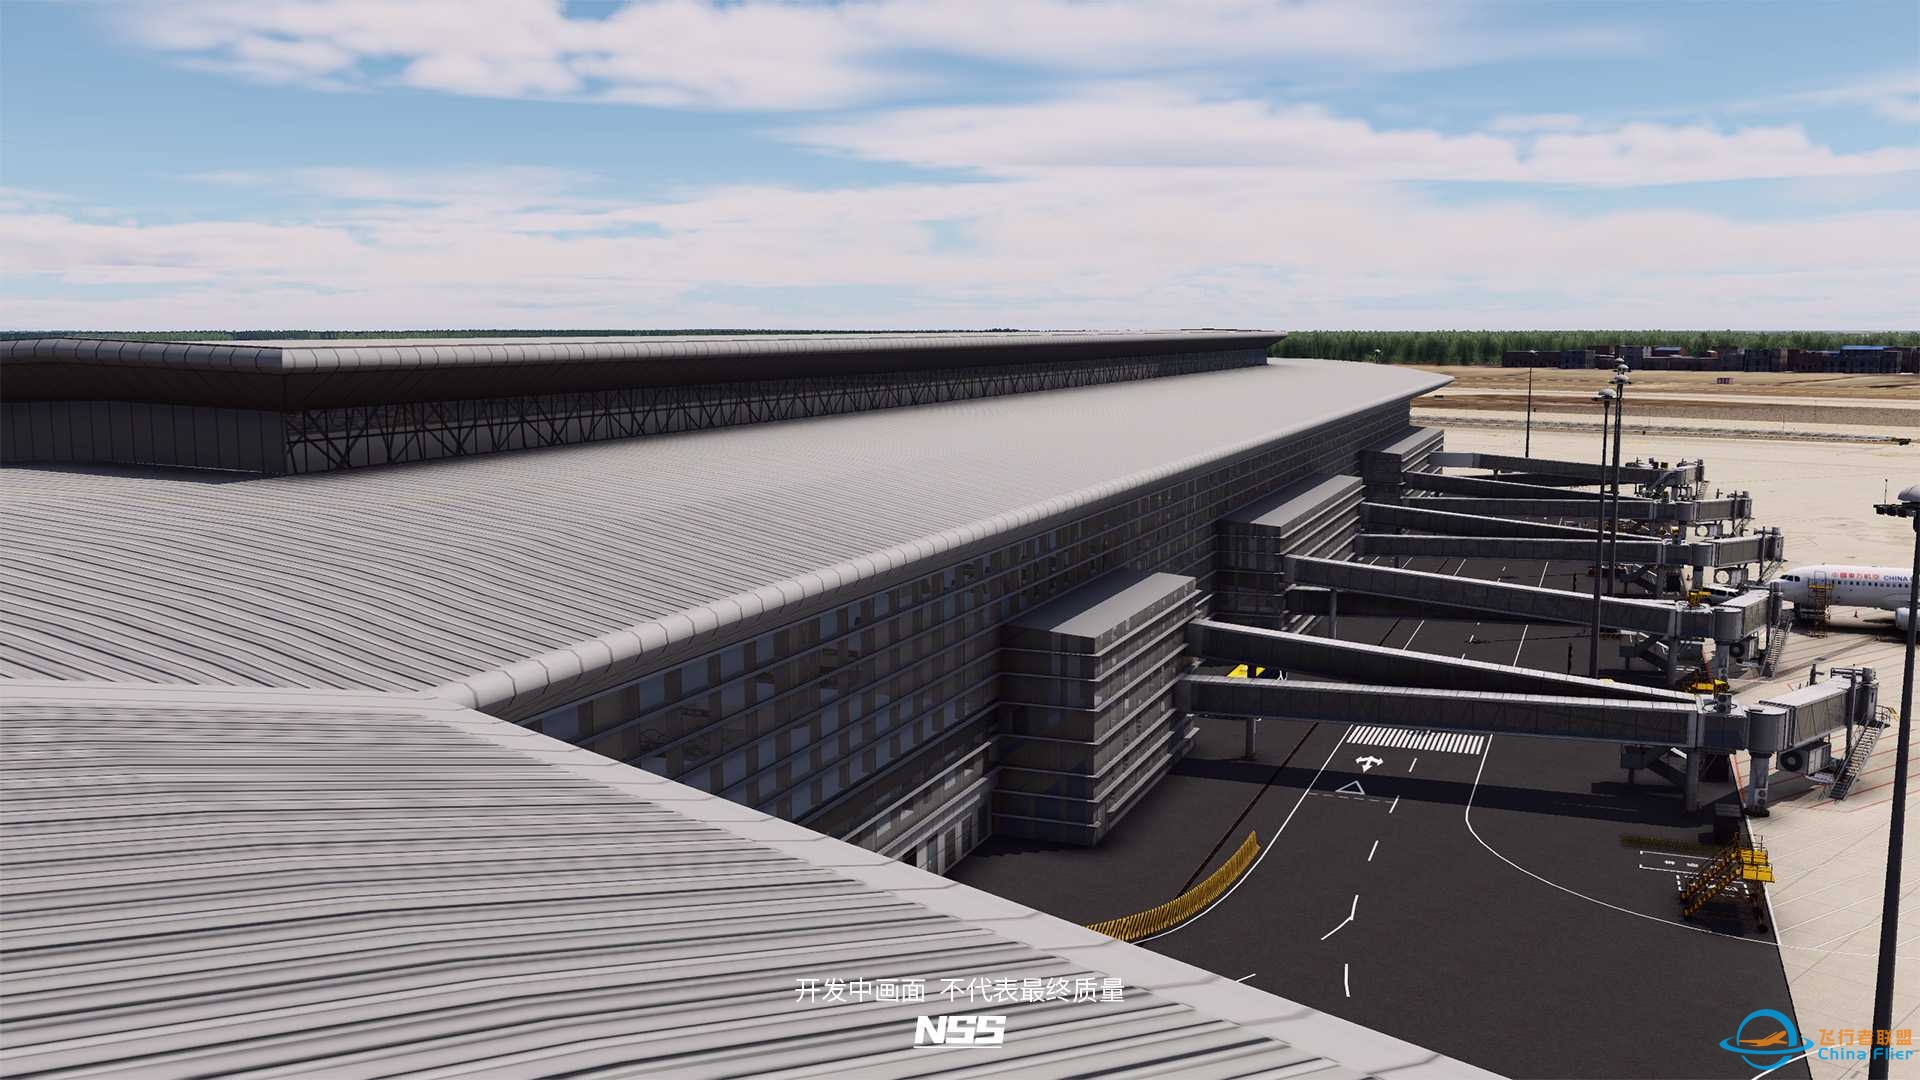 NSS地景开发组 | ZSJN | 济南遥墙国际机场项目最新进展-8926 